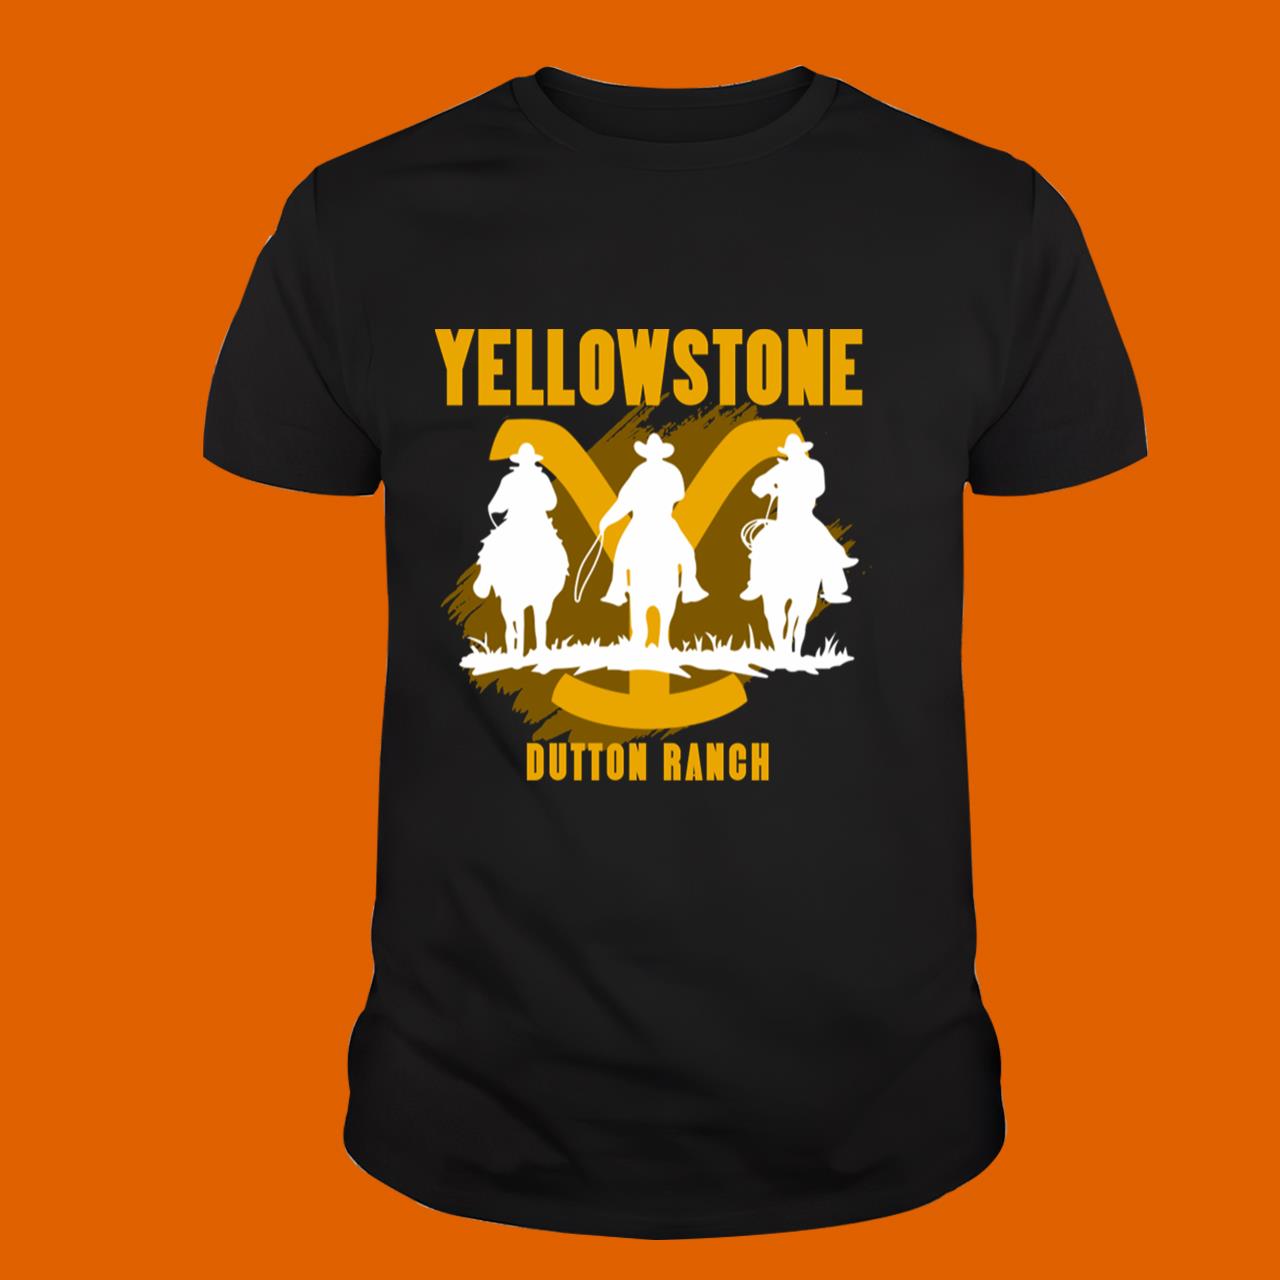 Yellowstone Dutton Ranch Shirts